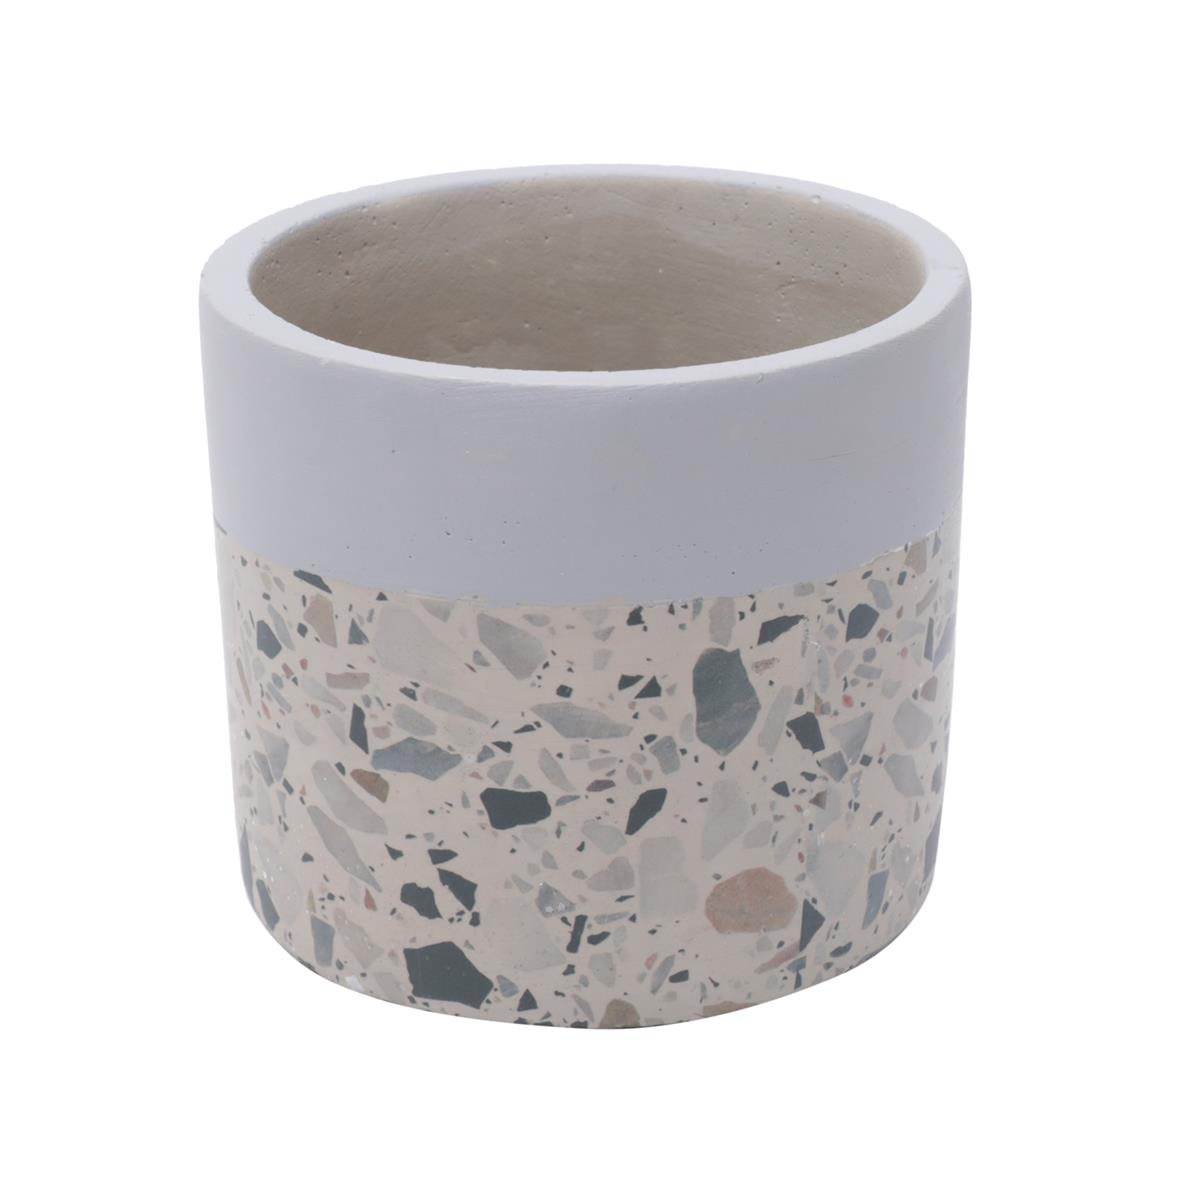 Cachepot concreto Granilite Fossil Stardust cinza/bege 8,5x7,5cm Urban